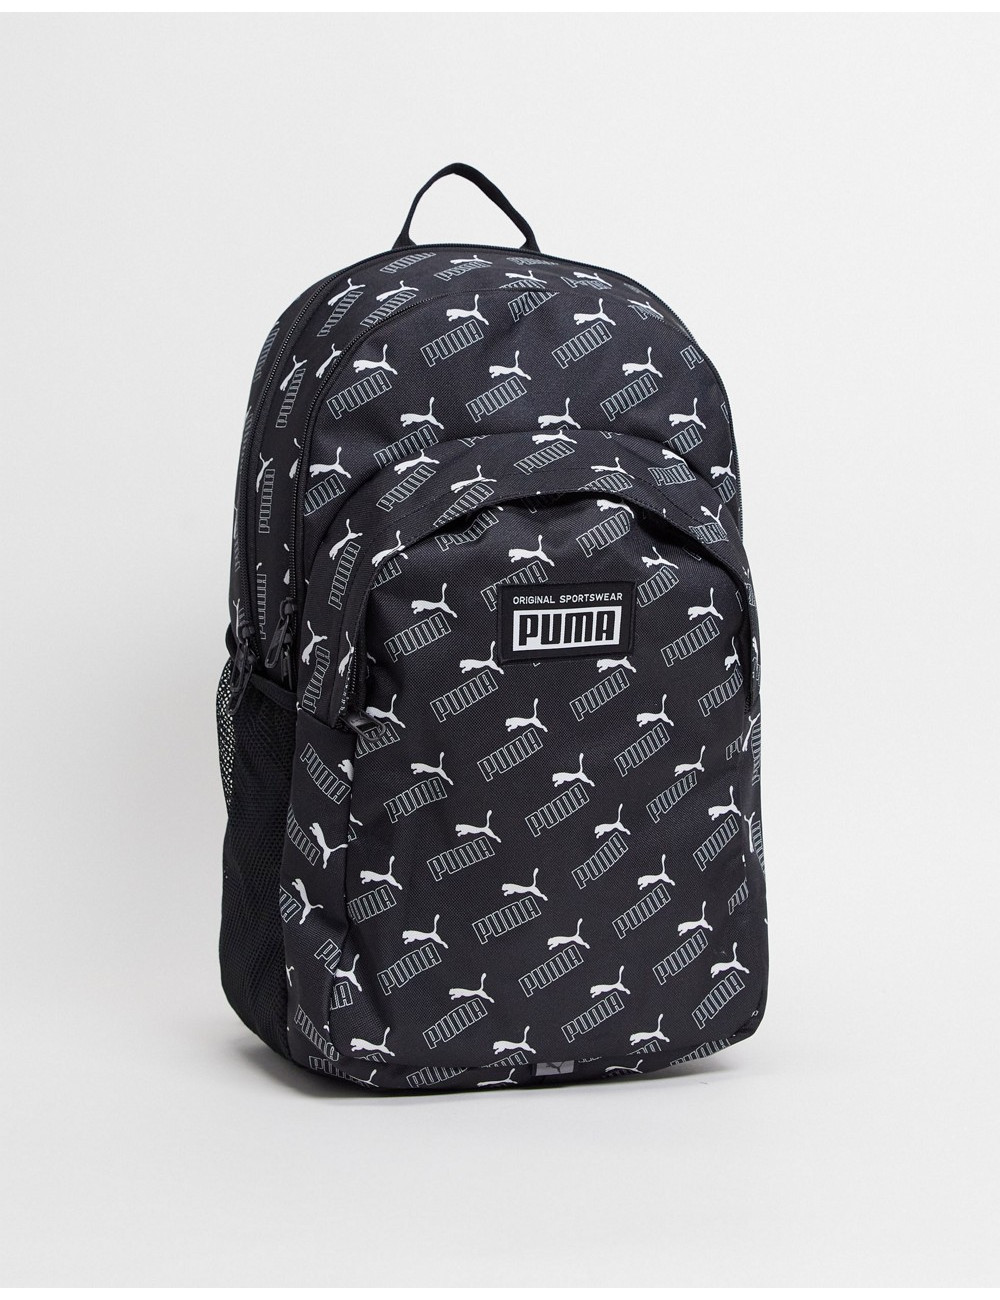 Puma Academy backpack in black